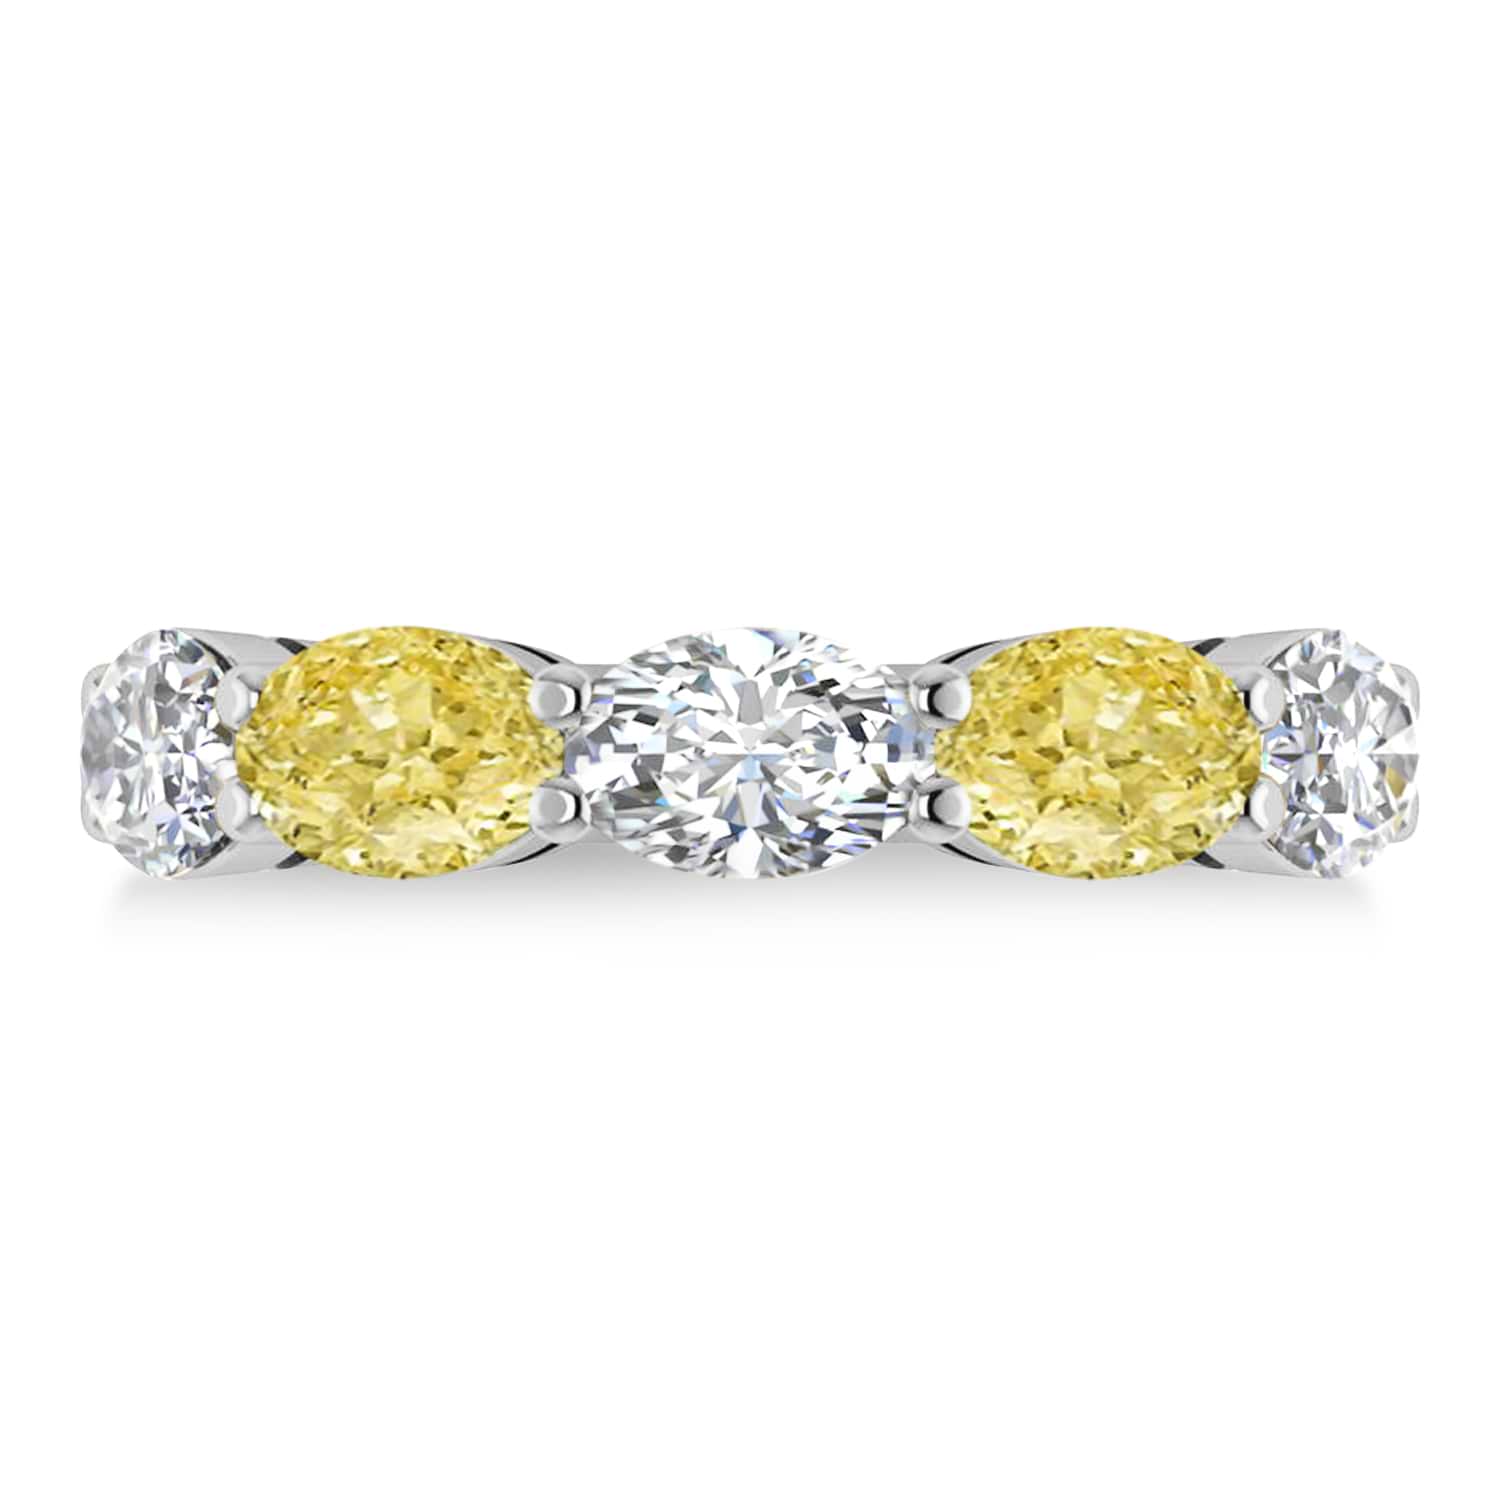 Oval Yellow & White Diamond Five Stone Ring 14k White Gold (5.00ct)